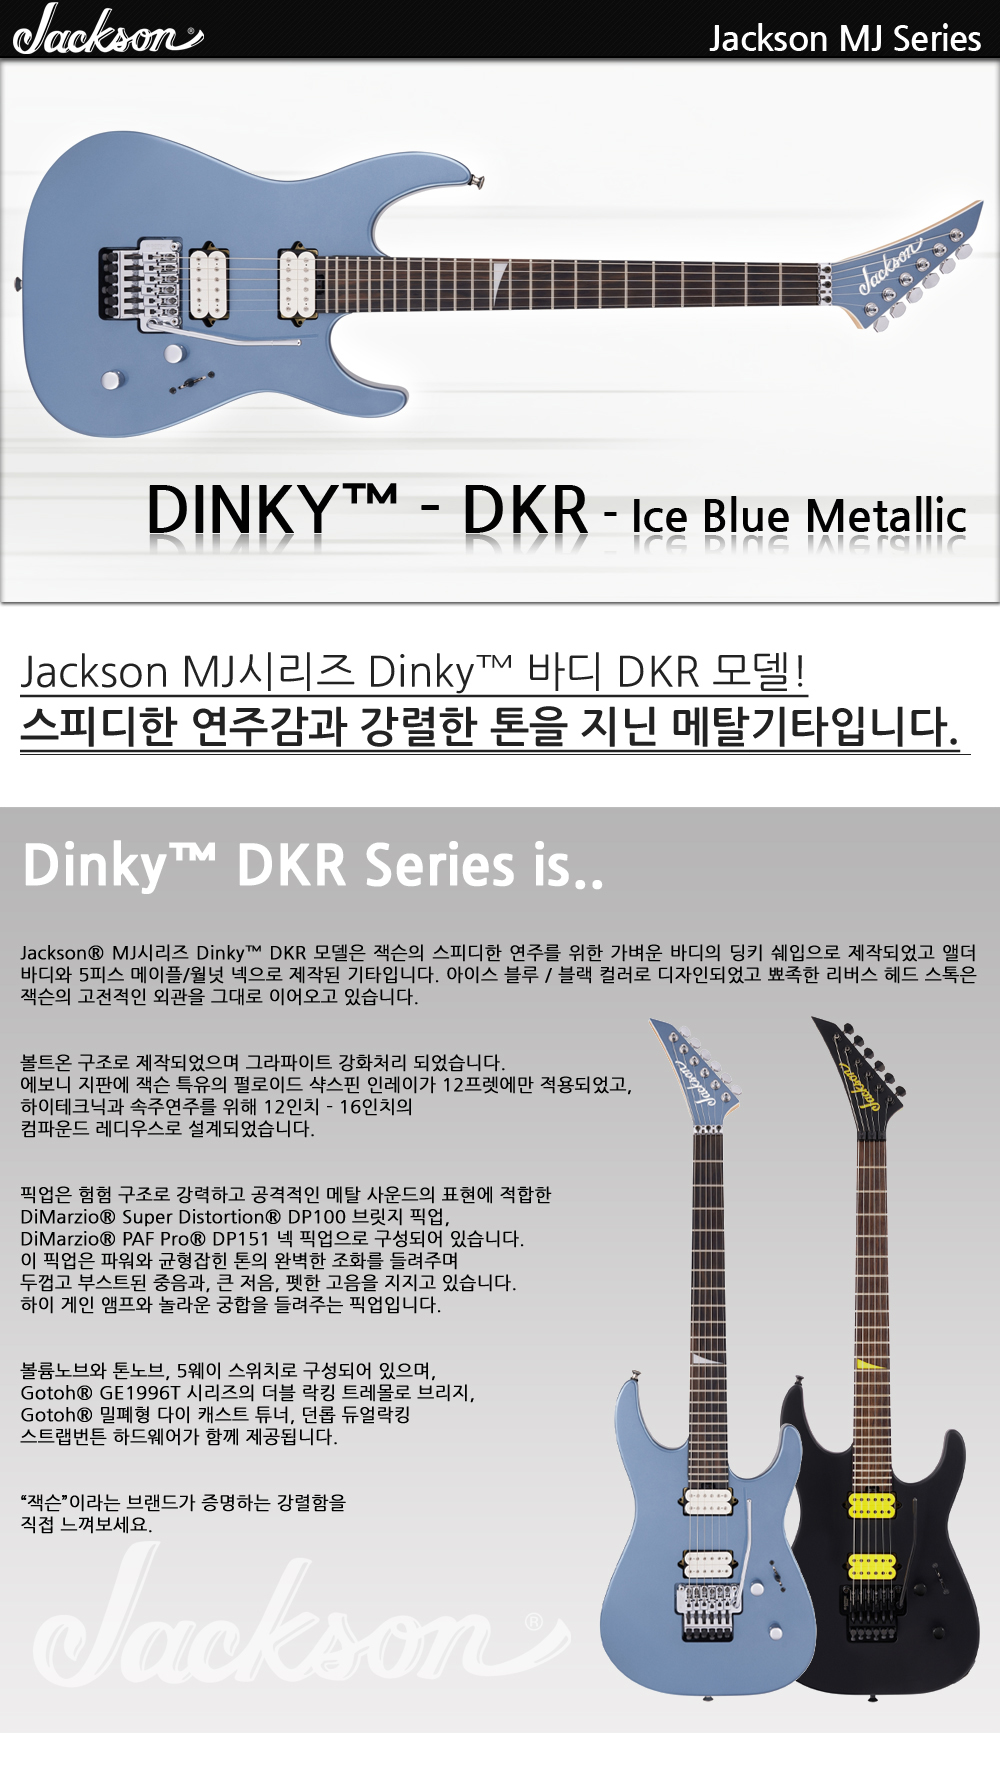 Jackson-MJ-Dinky-DKR-IceBlueMetallic_1_171207.jpg